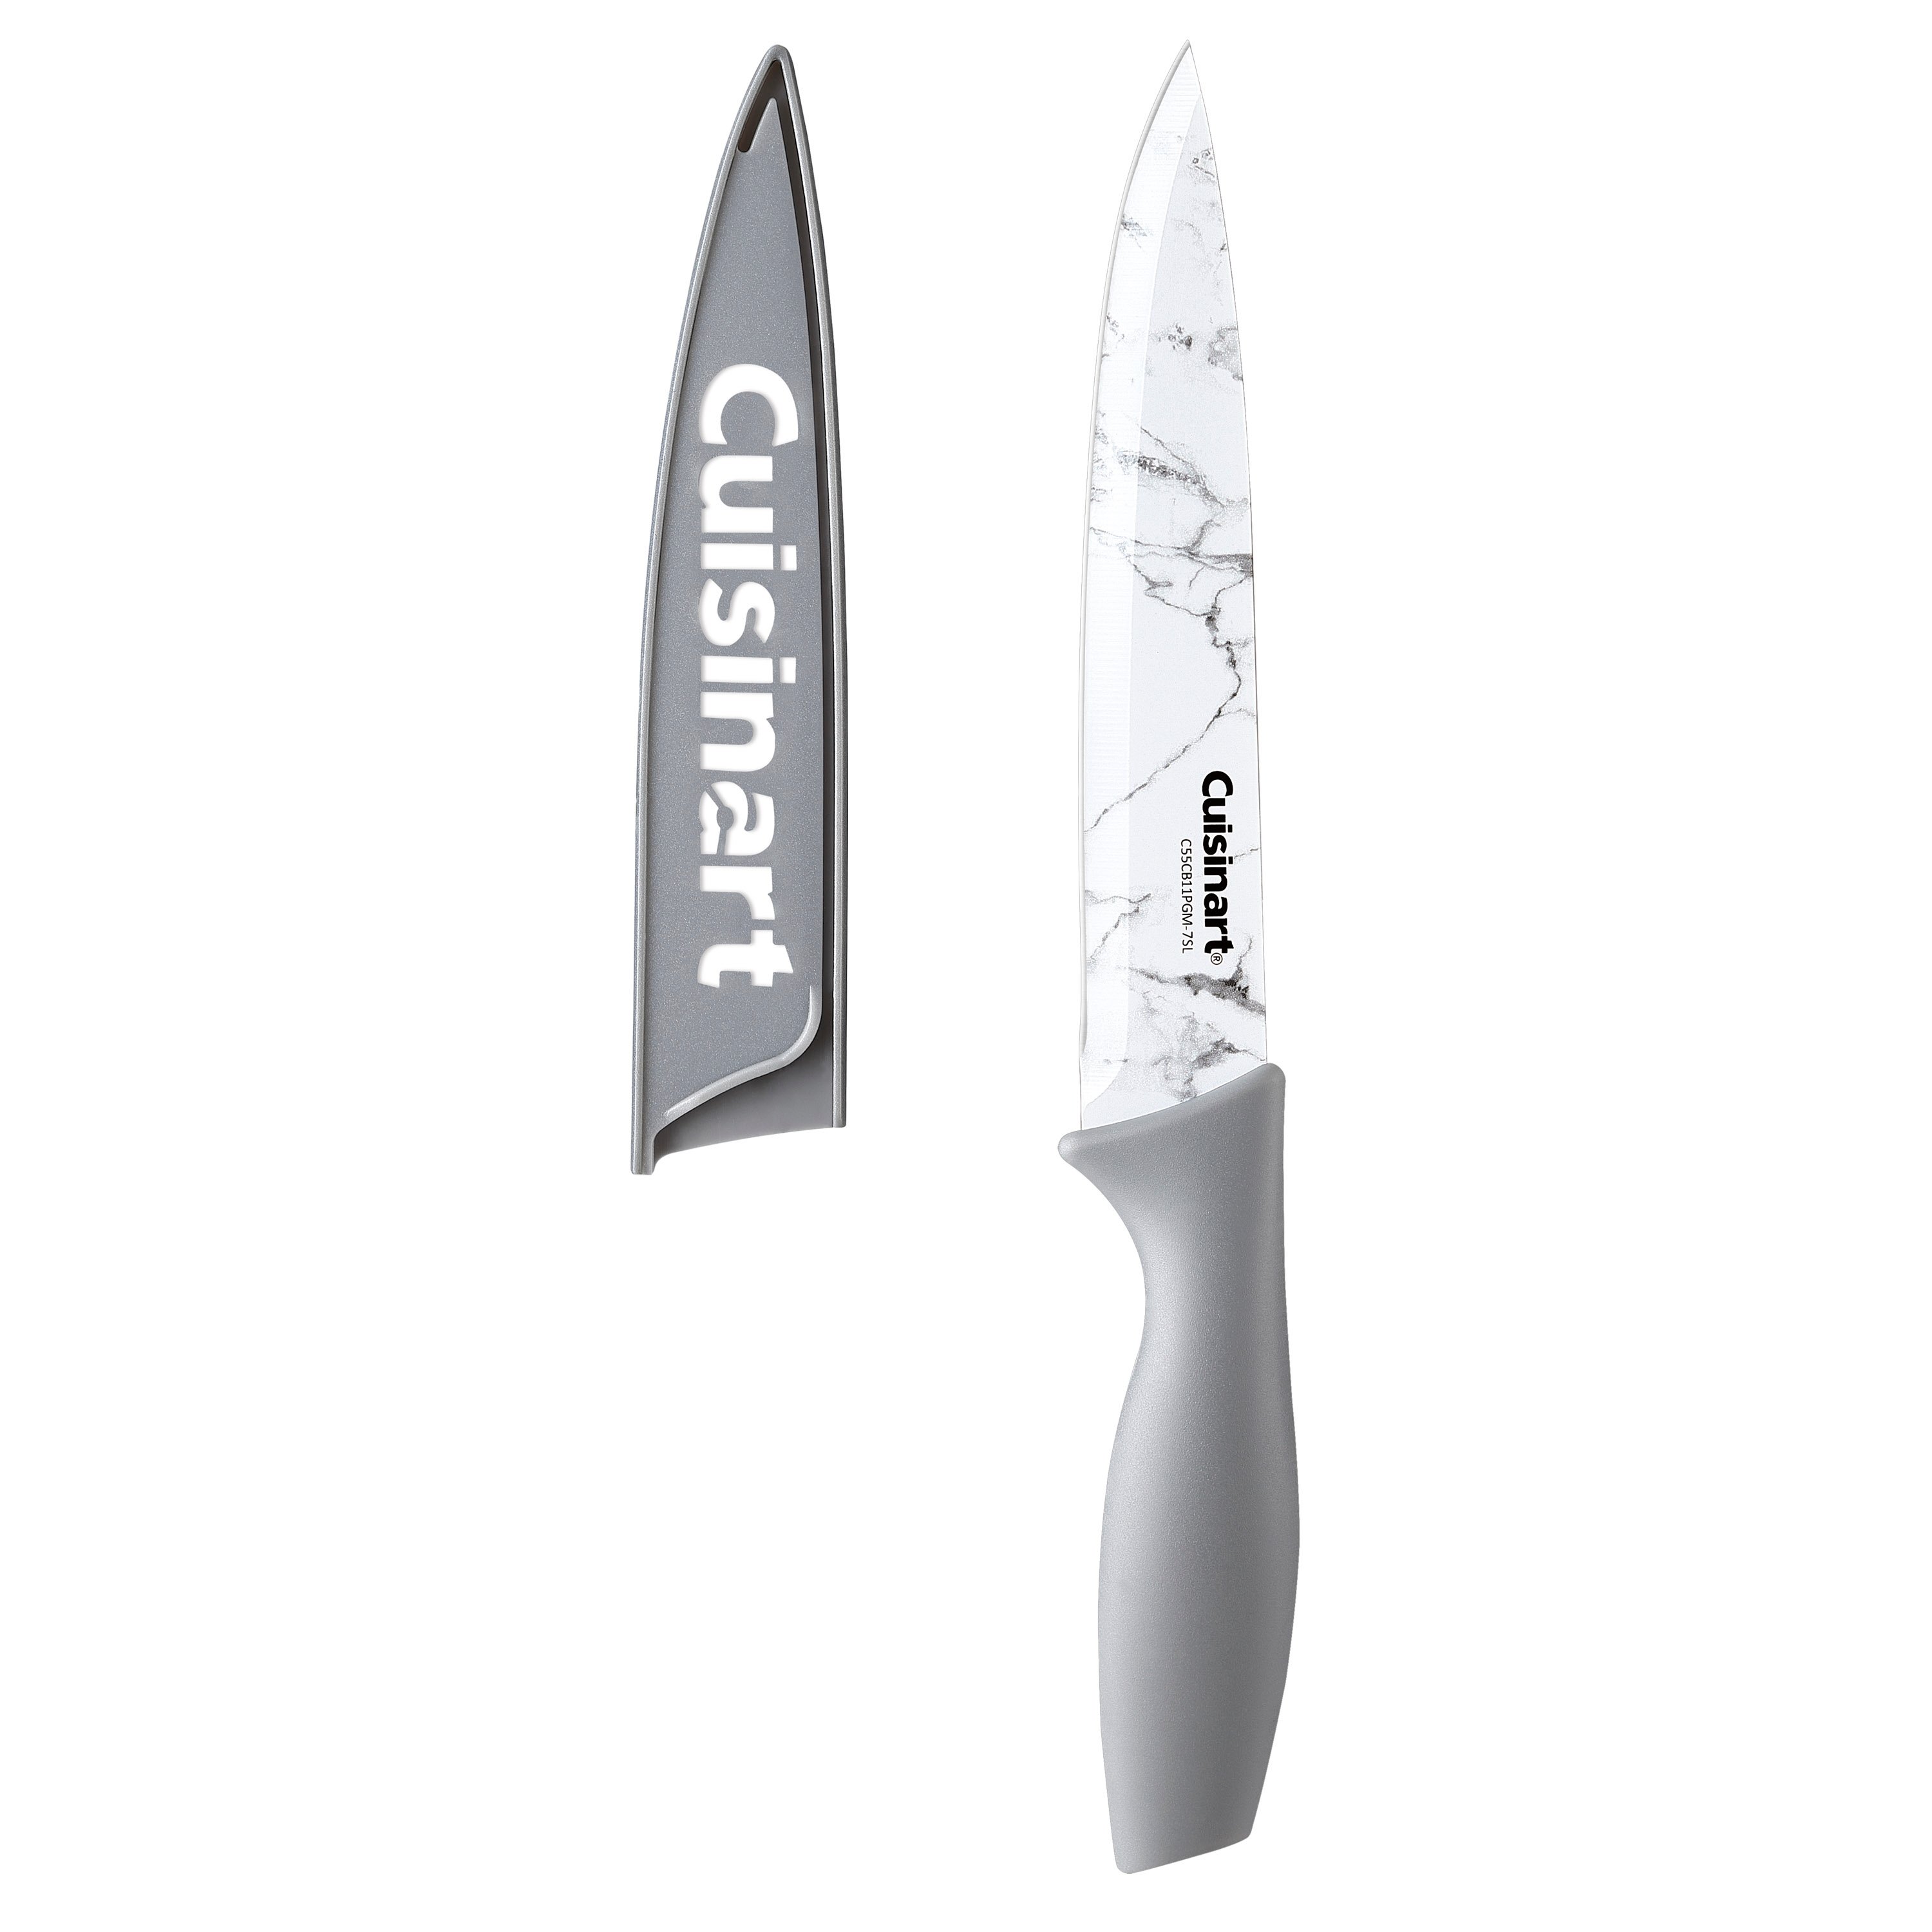 Cuisinart 11-piece knife set review